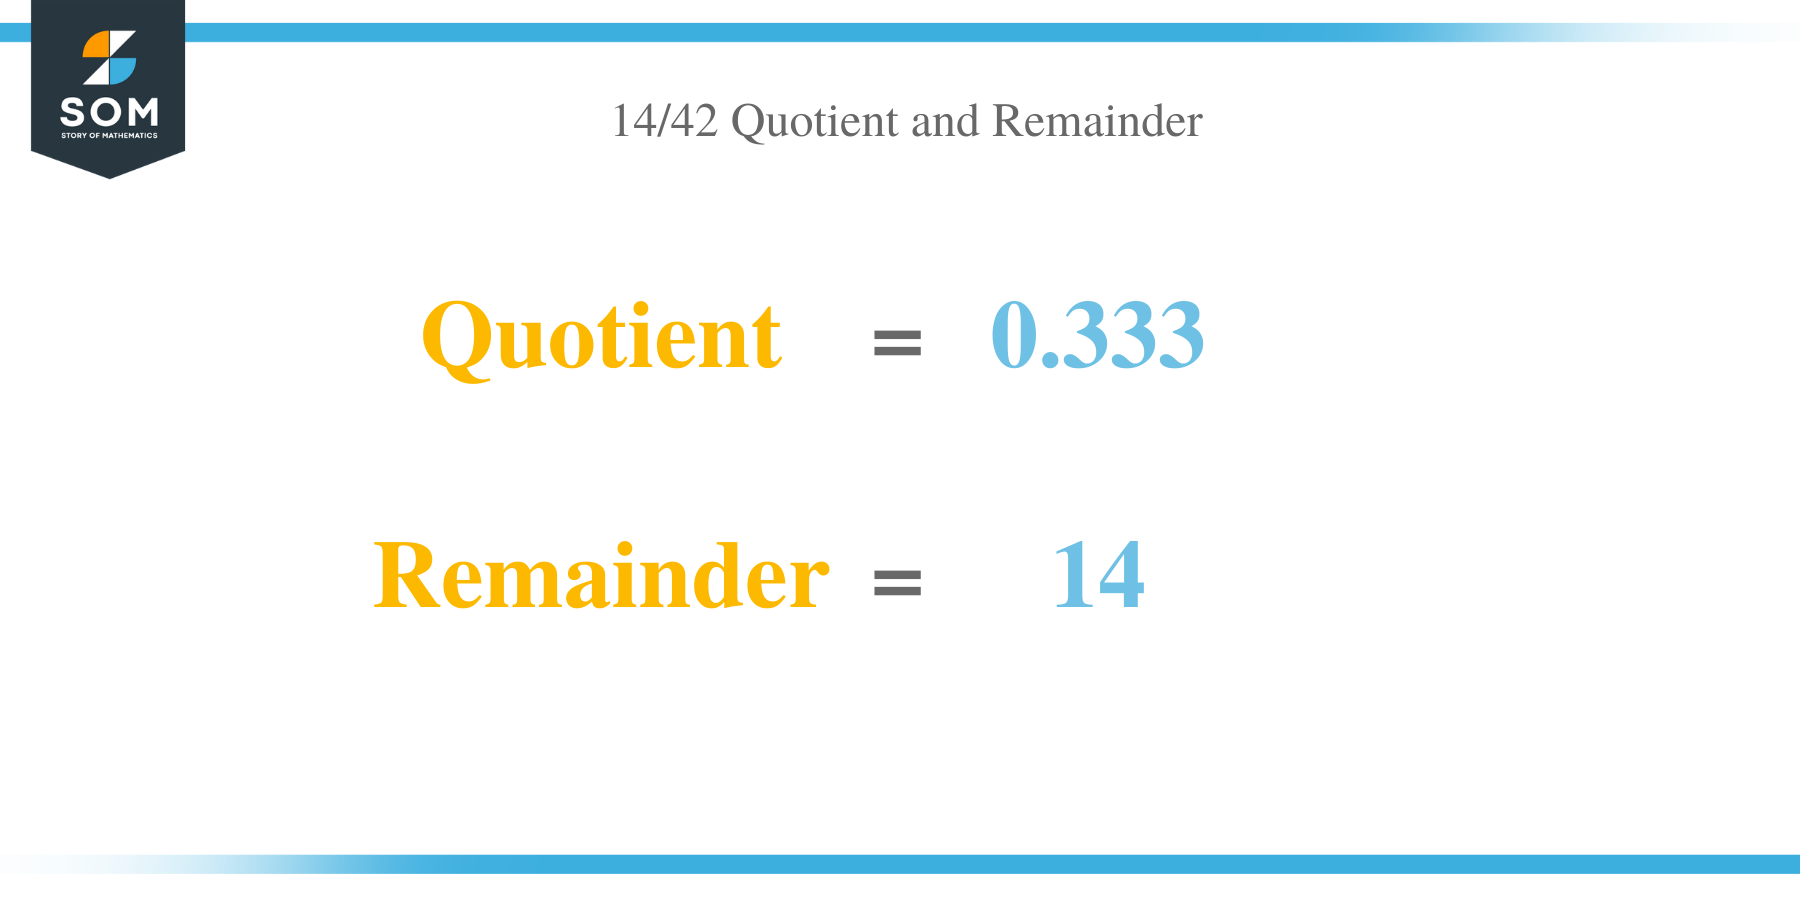 Quotient and Remainder of 14 per 42